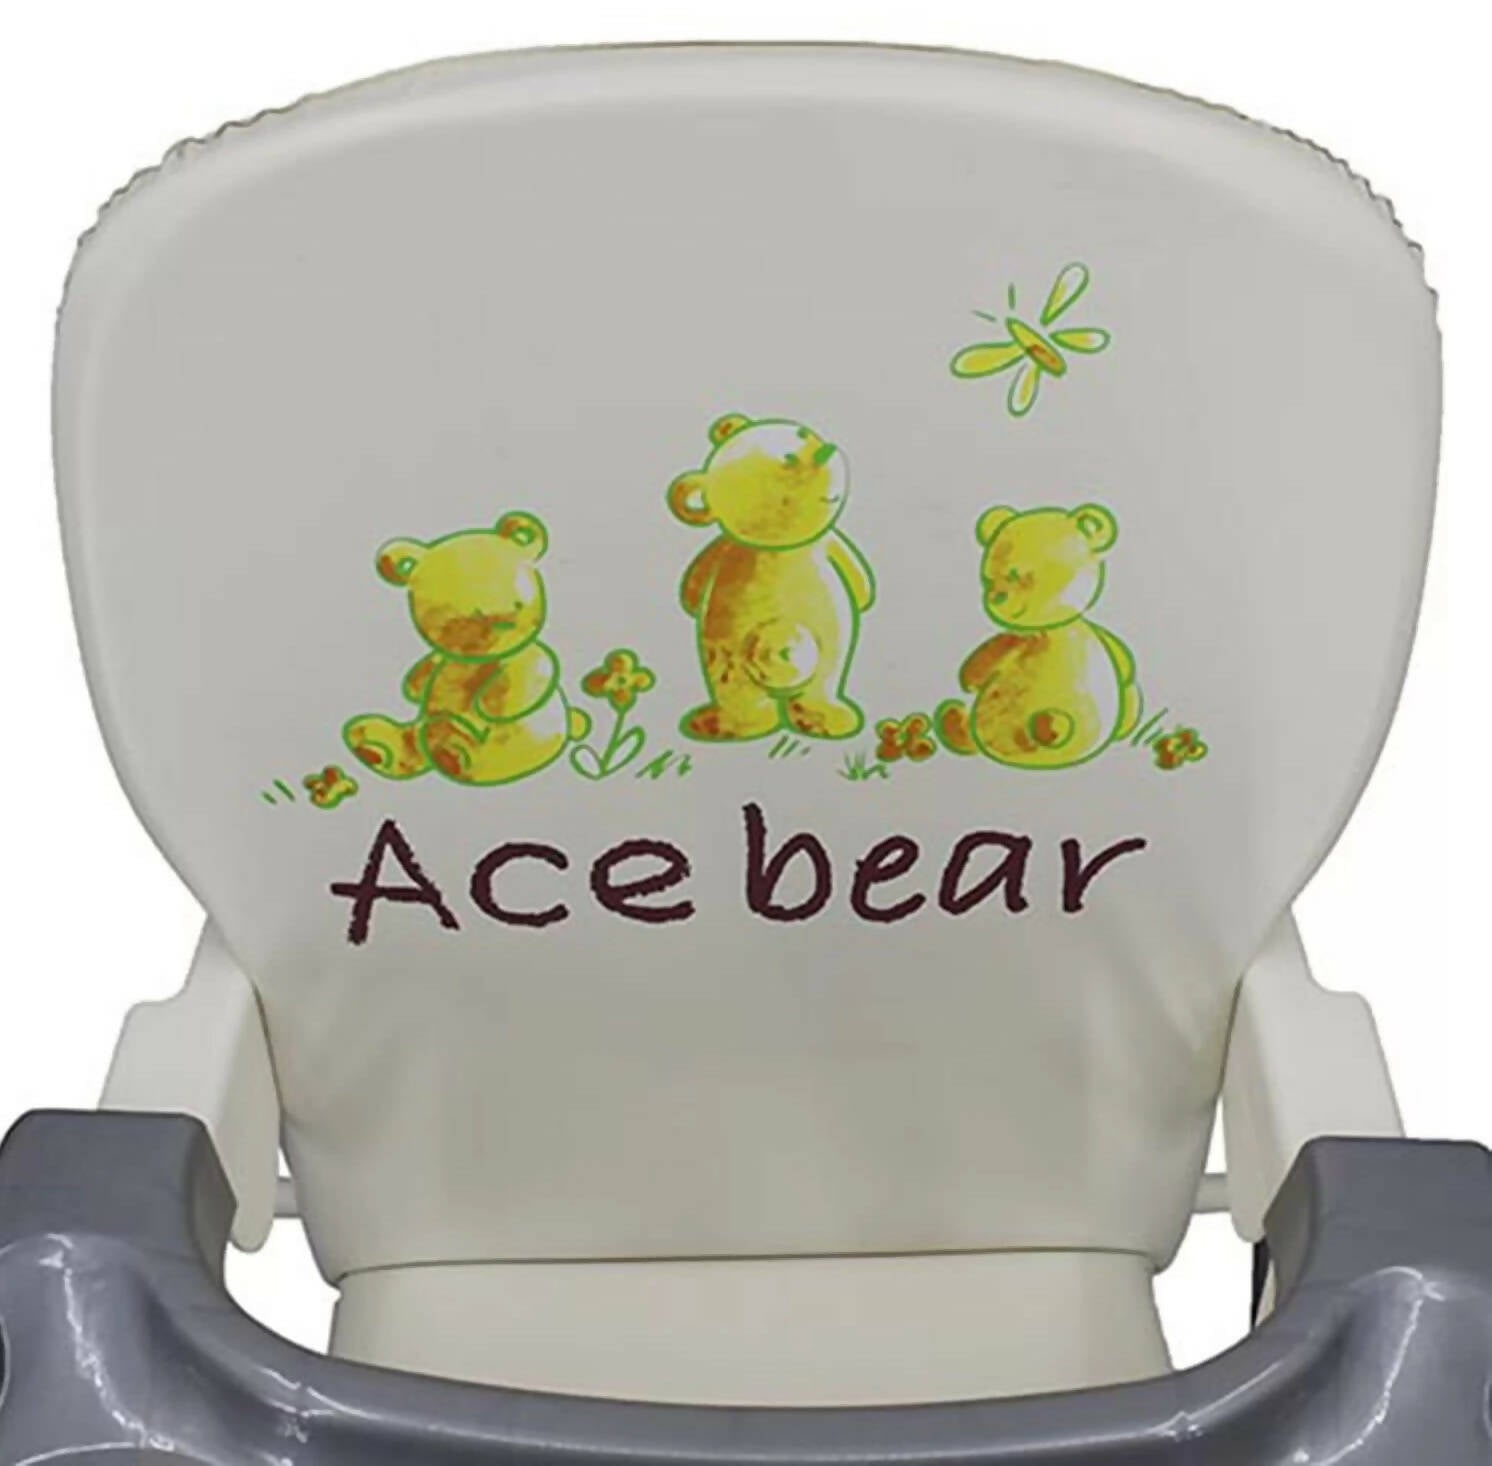 Ace bear High chair | Kids & Baby Gear | Preloved